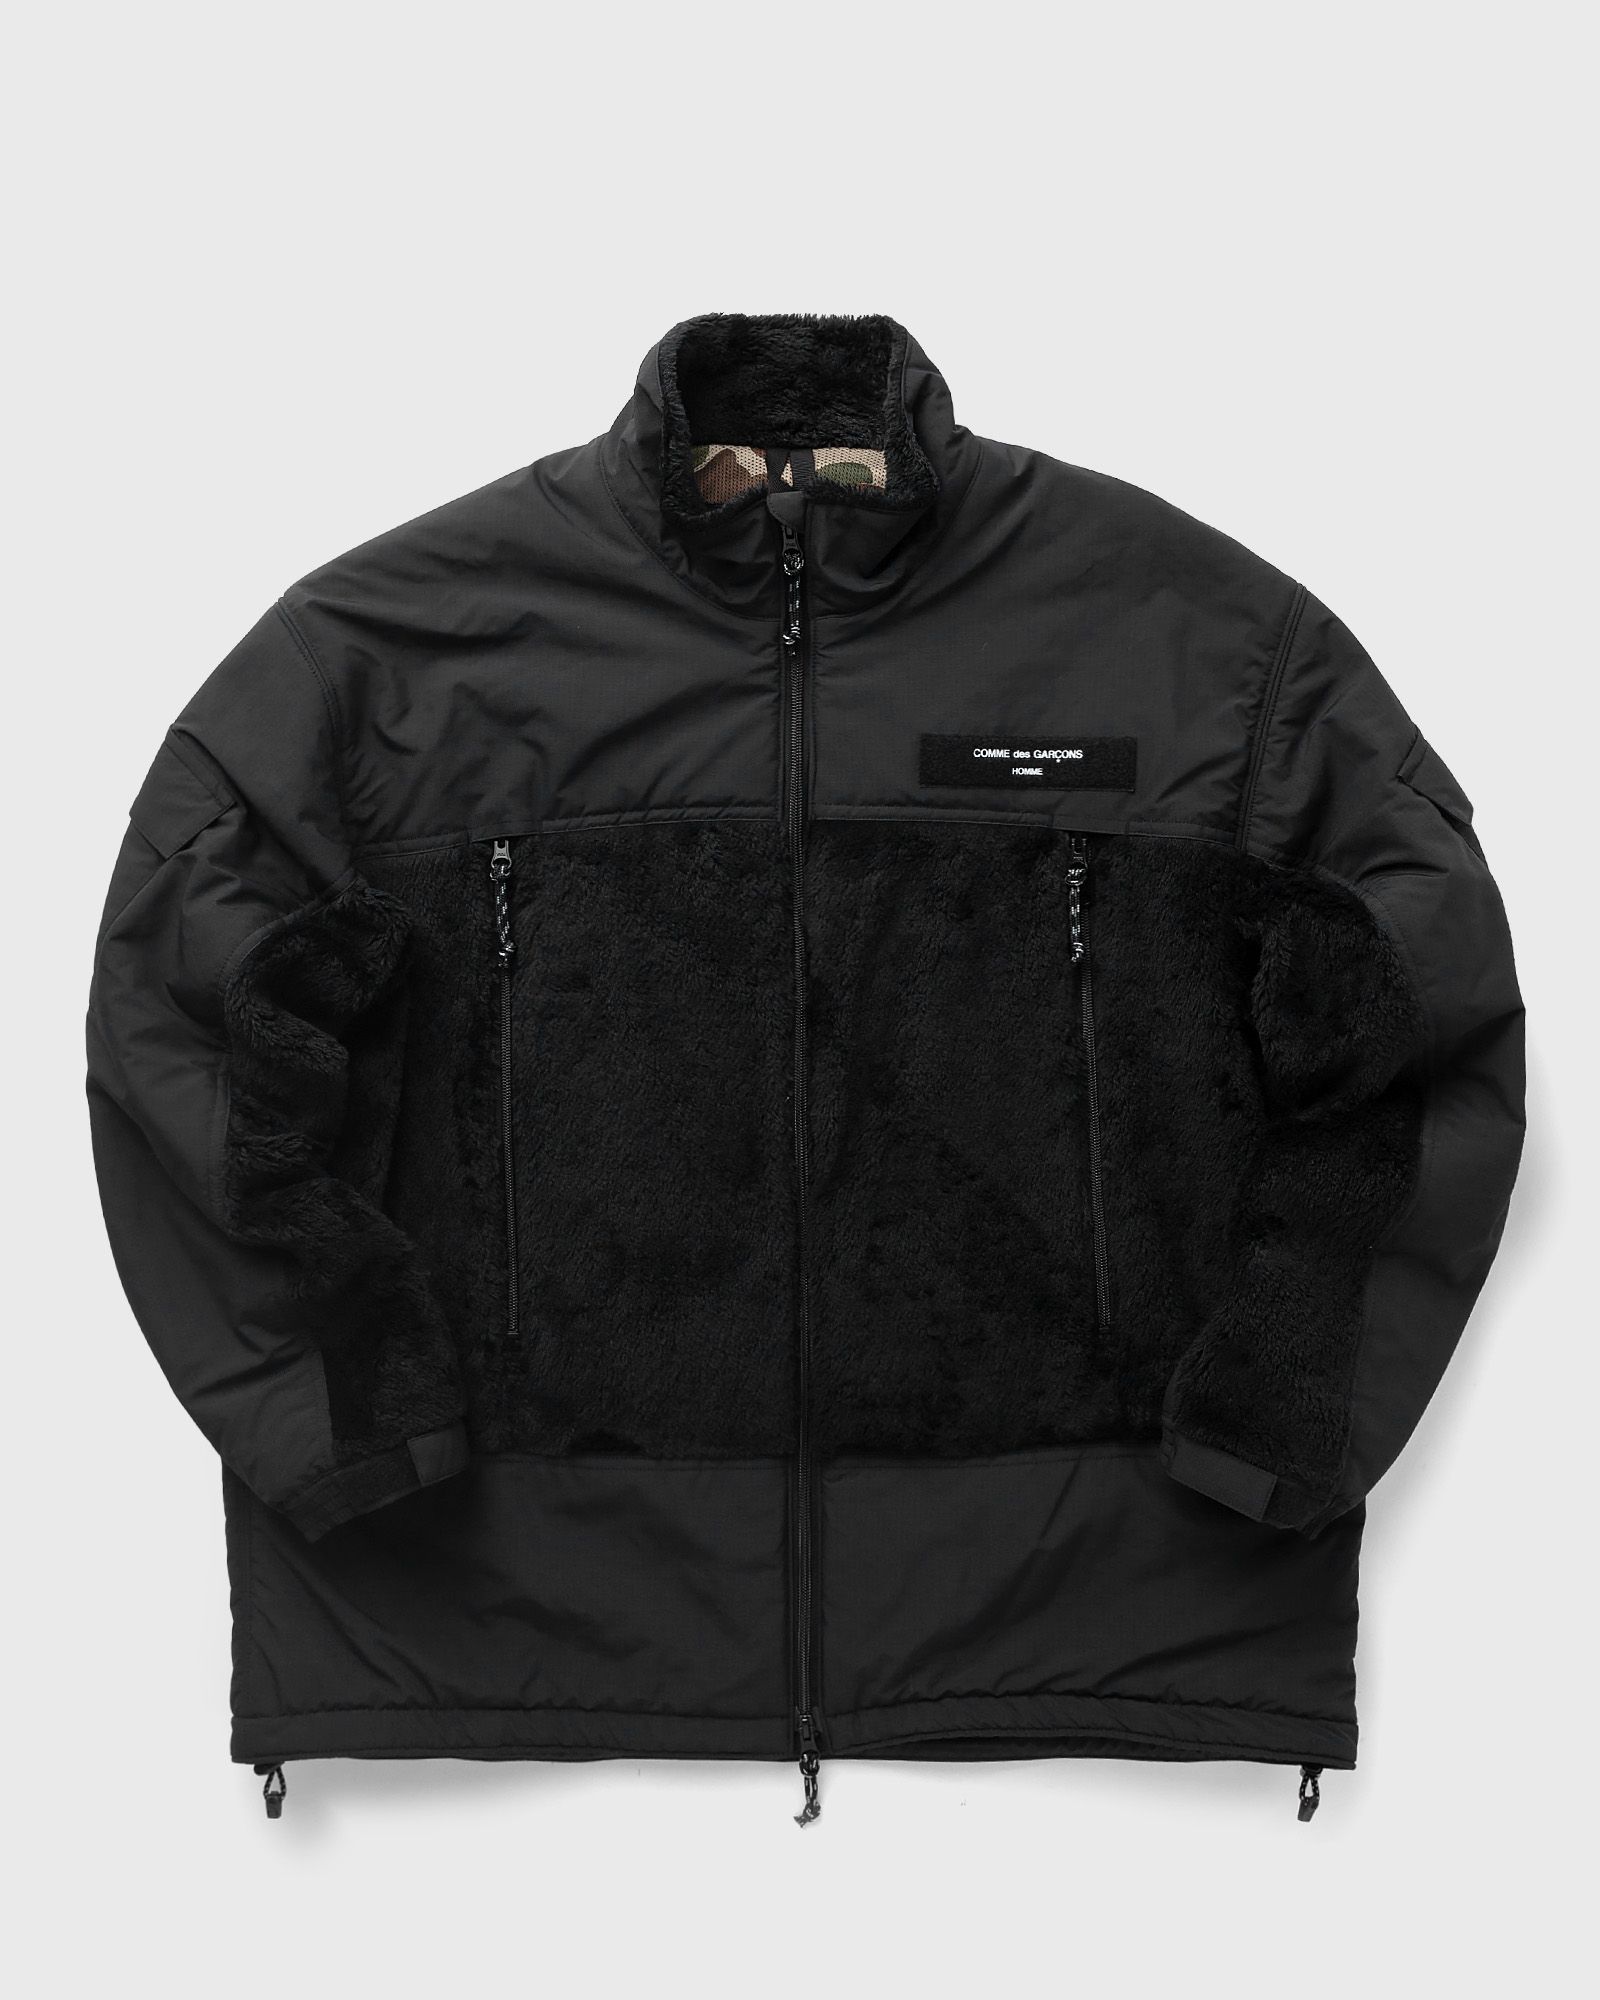 Comme des Garçons Homme - fleece jacket men fleece jackets black in größe:m